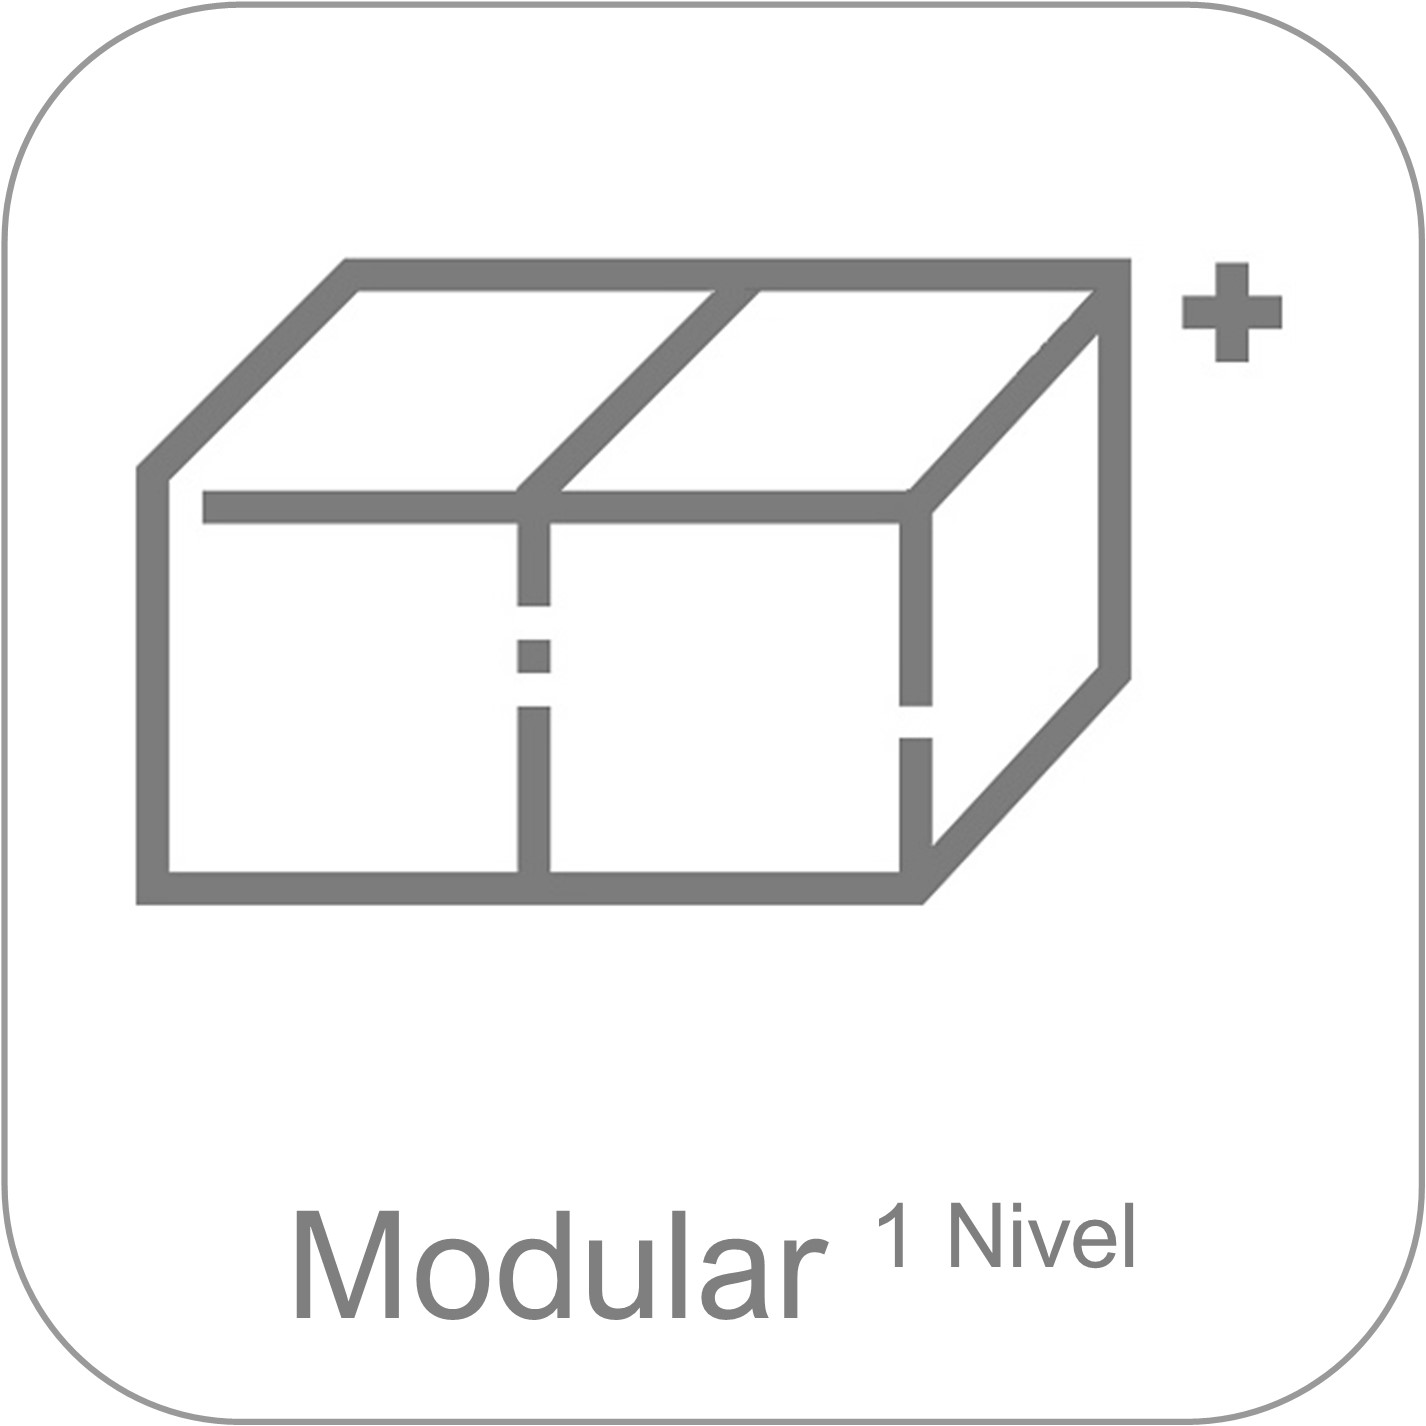 Monobloque NIC15 - Oficinas móviles - Modular